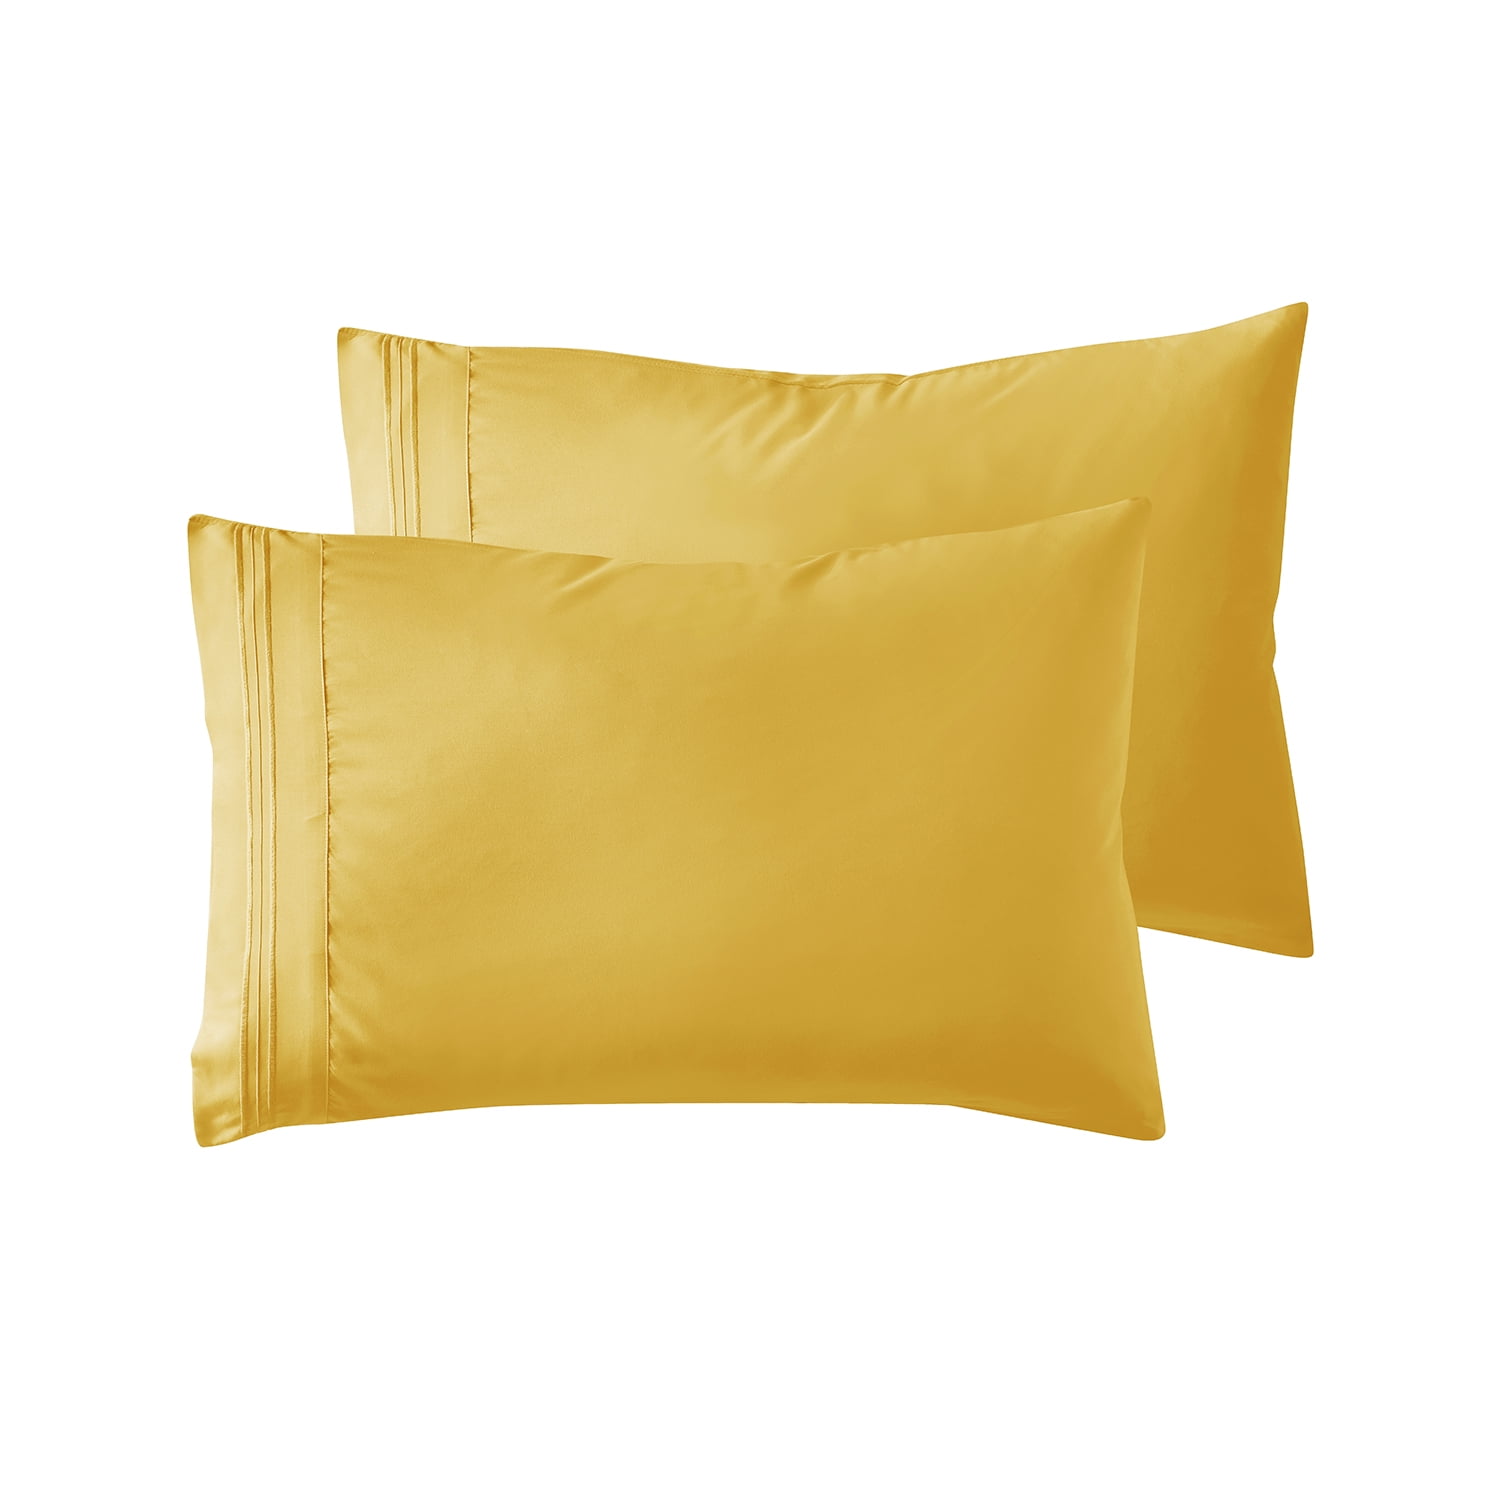 Nestl Pillow cases Premier 1800, Luxury Soft Microfiber Pillow Case Sleep  Covers, Queen Standard Size (20x 30), Pillow Case Set of 2 Pieces, Mocha  Light Brown 